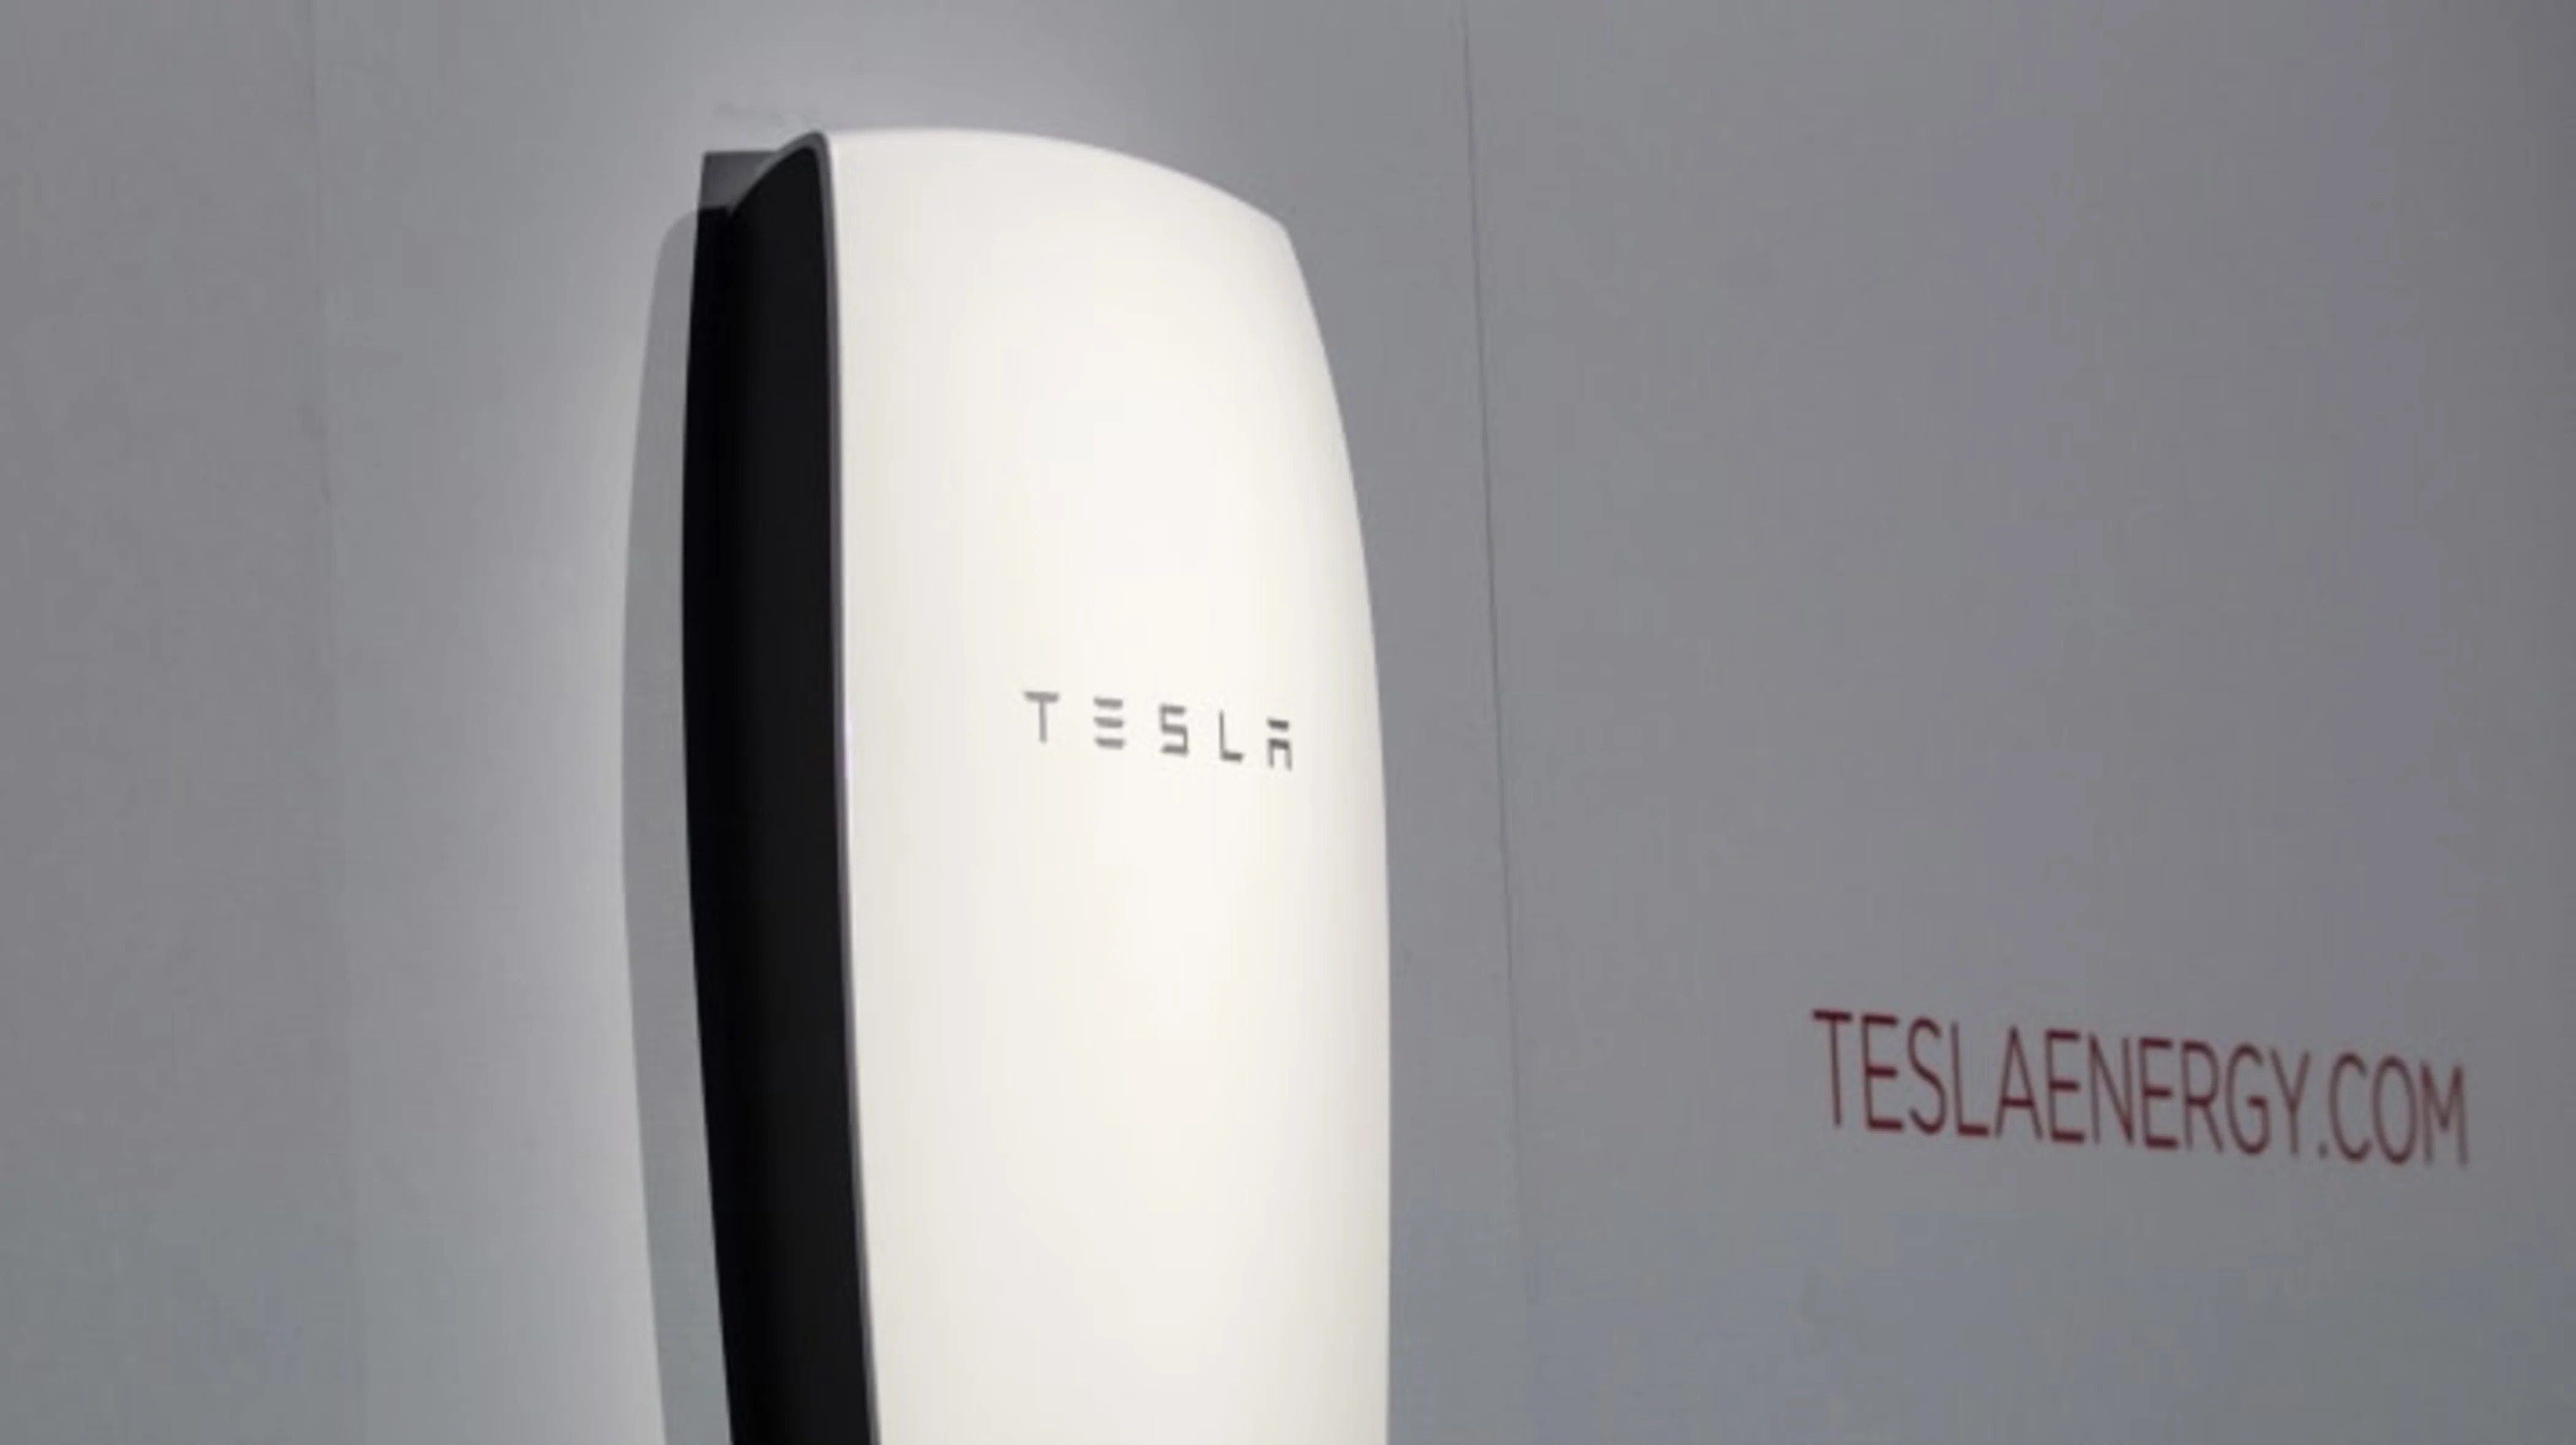 Tesla-Battery Power For Homes